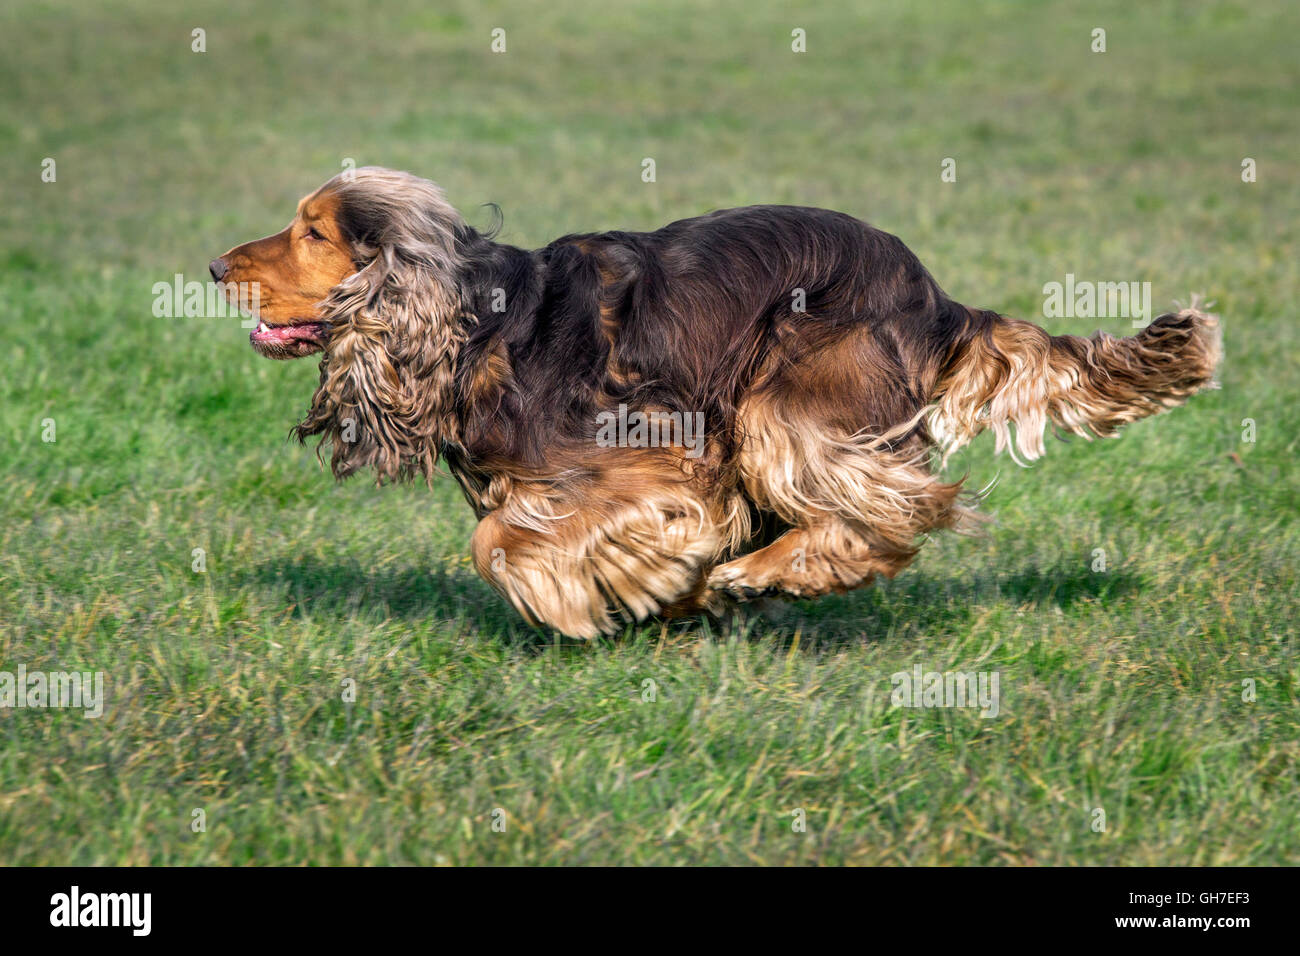 English Cocker Spaniel dog (Canis lupus familiaris) running in garden Stock Photo